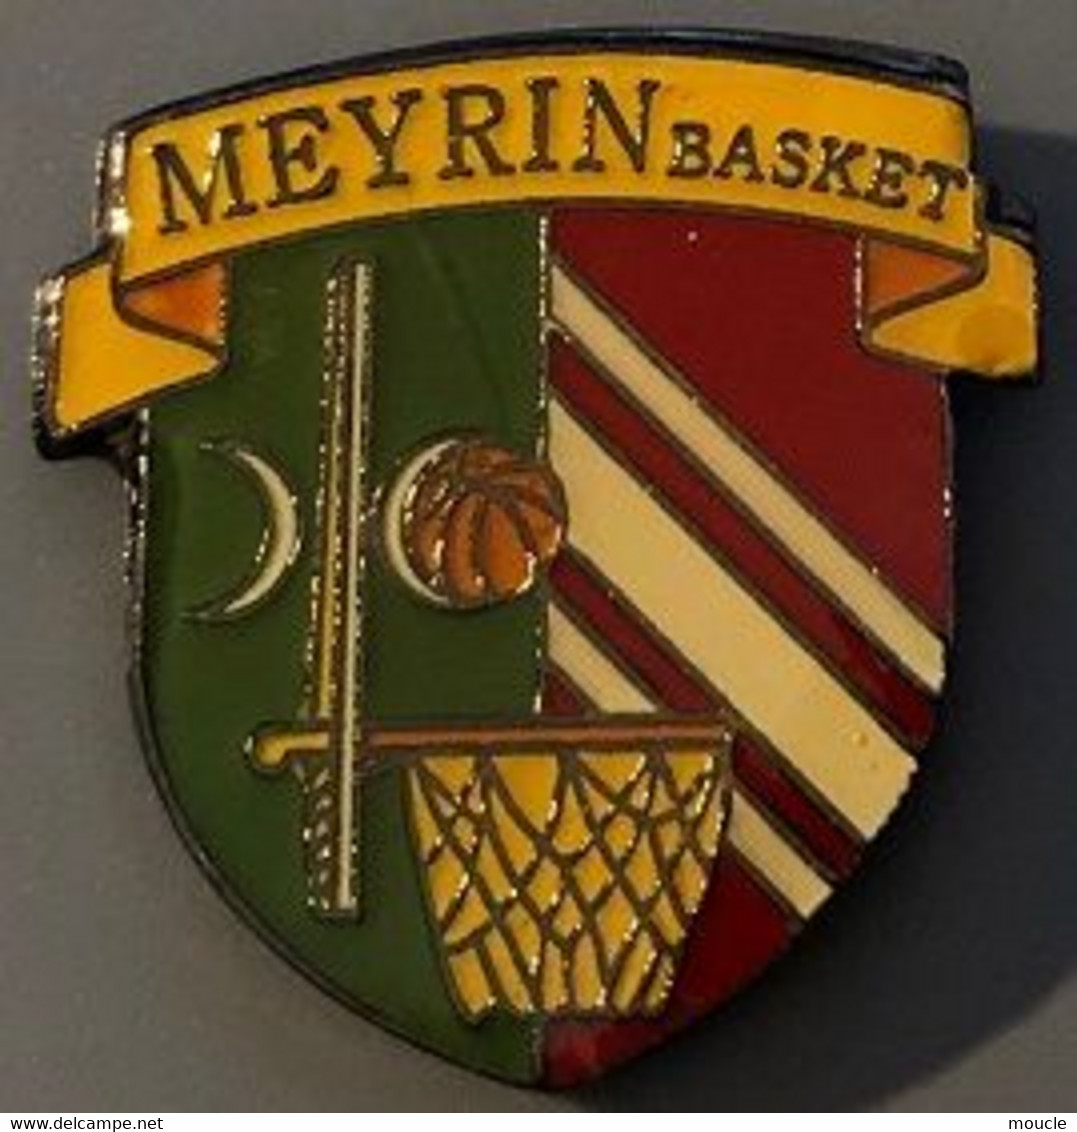 MEYRIN BASKET - GENEVE - SUISSE - SCHWEIZ - SWITZERLAND - PANIER - BLASON - BALLON - EPEE  -    (14) - Basketball